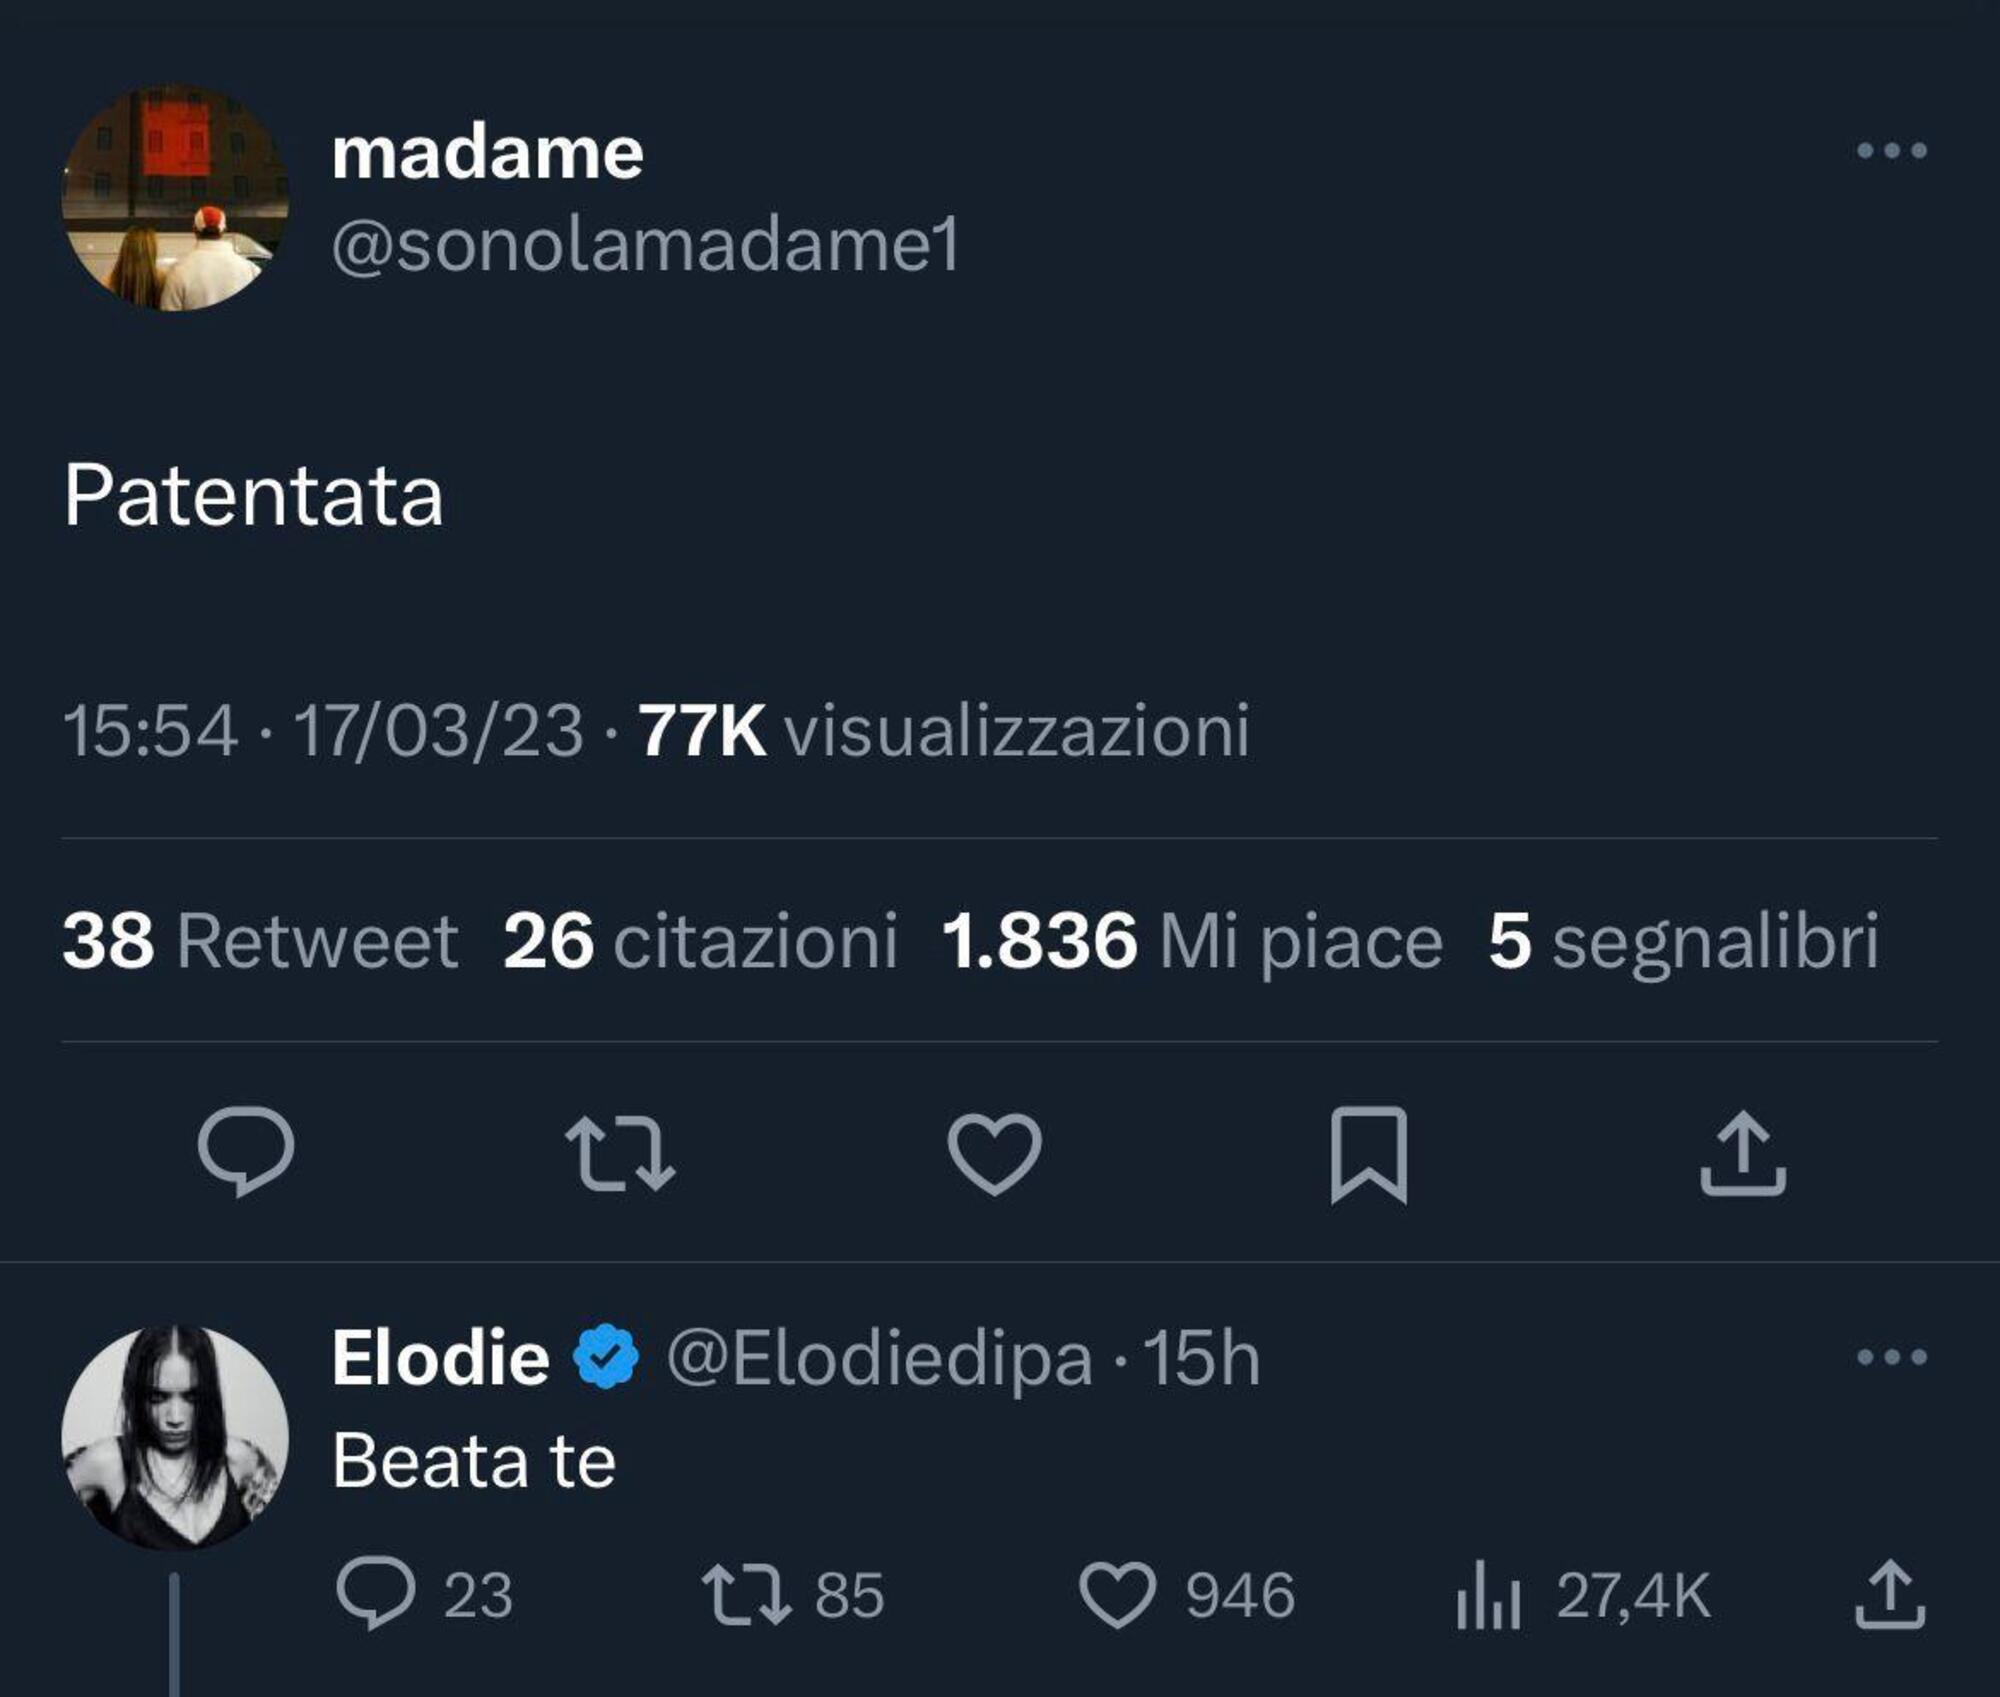 Il tweet di Madame e la risposta di Elodie